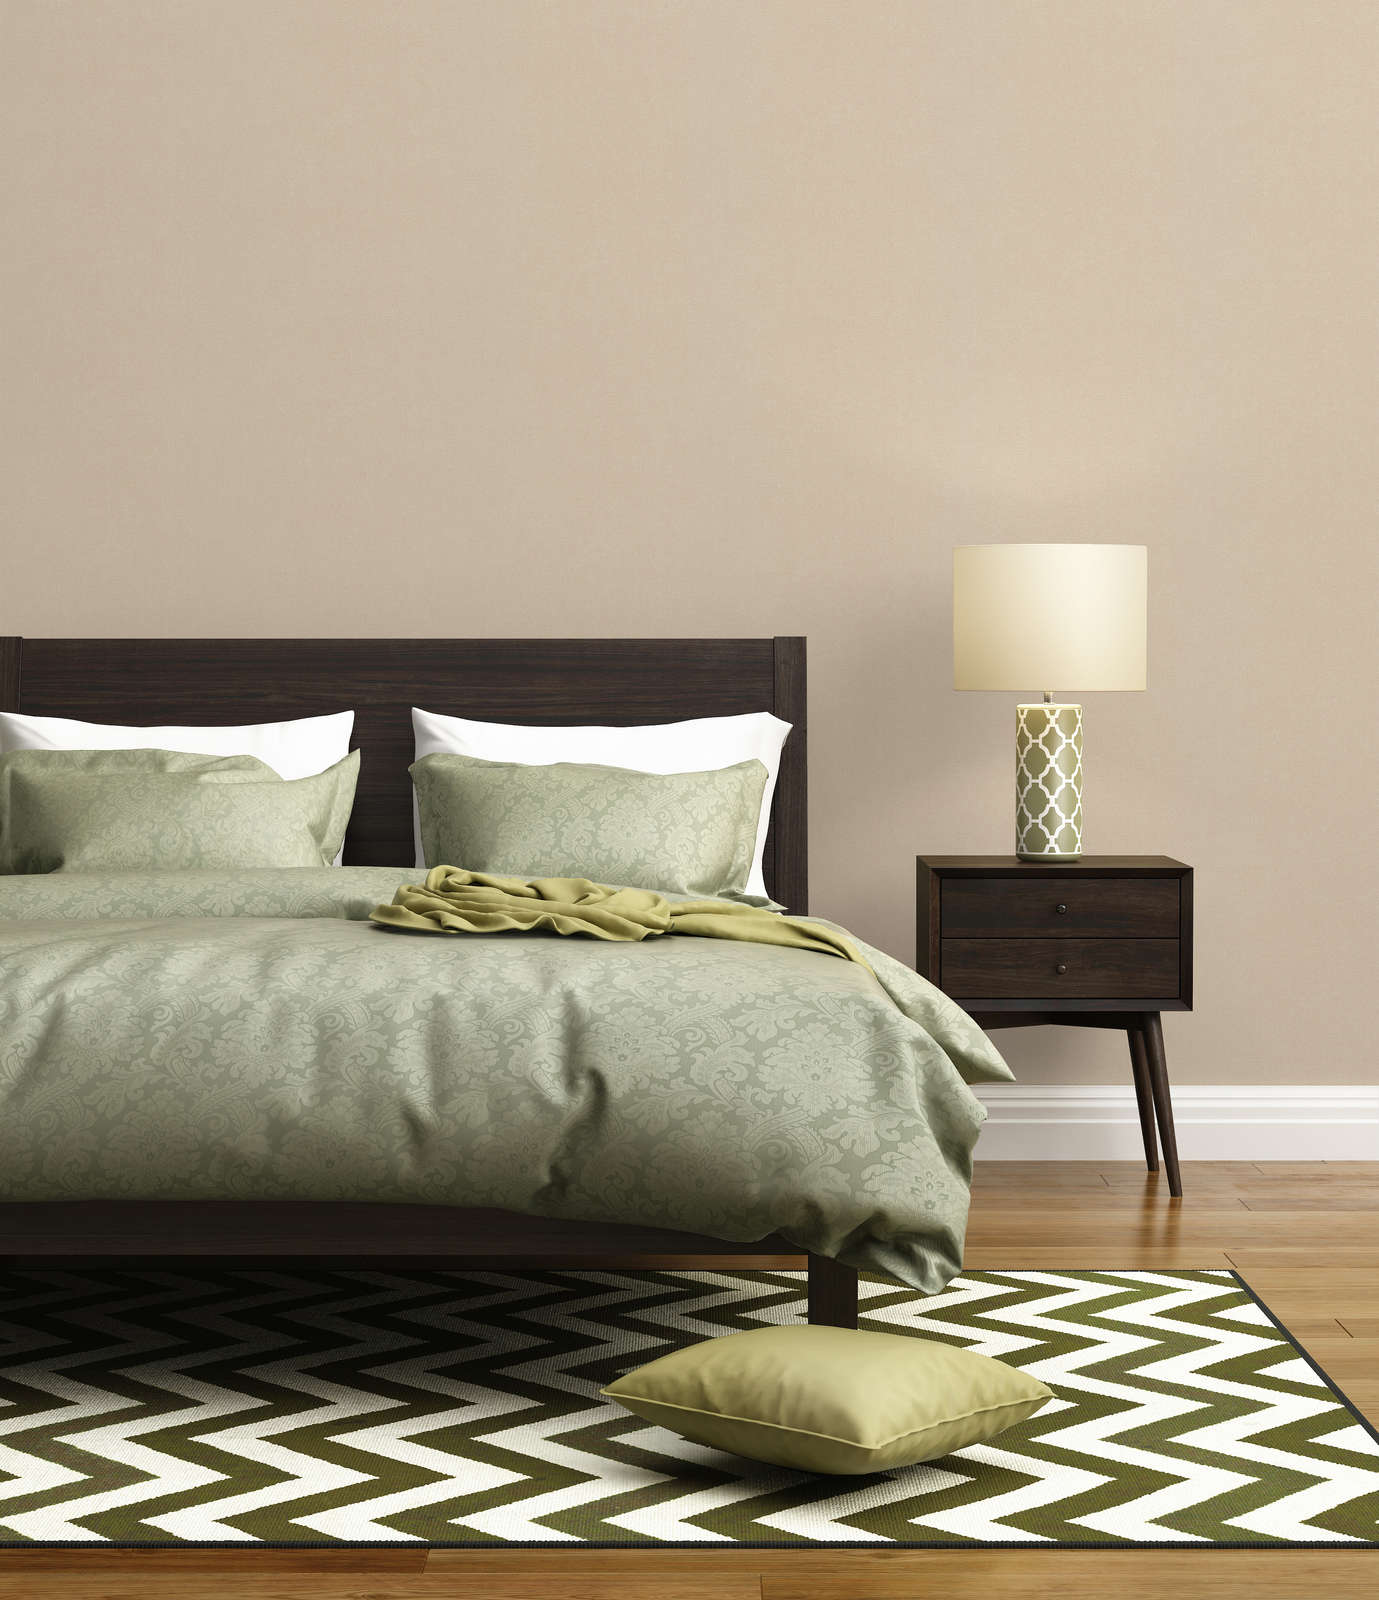             Non-woven wallpaper plains with fine structure - cream, beige
        